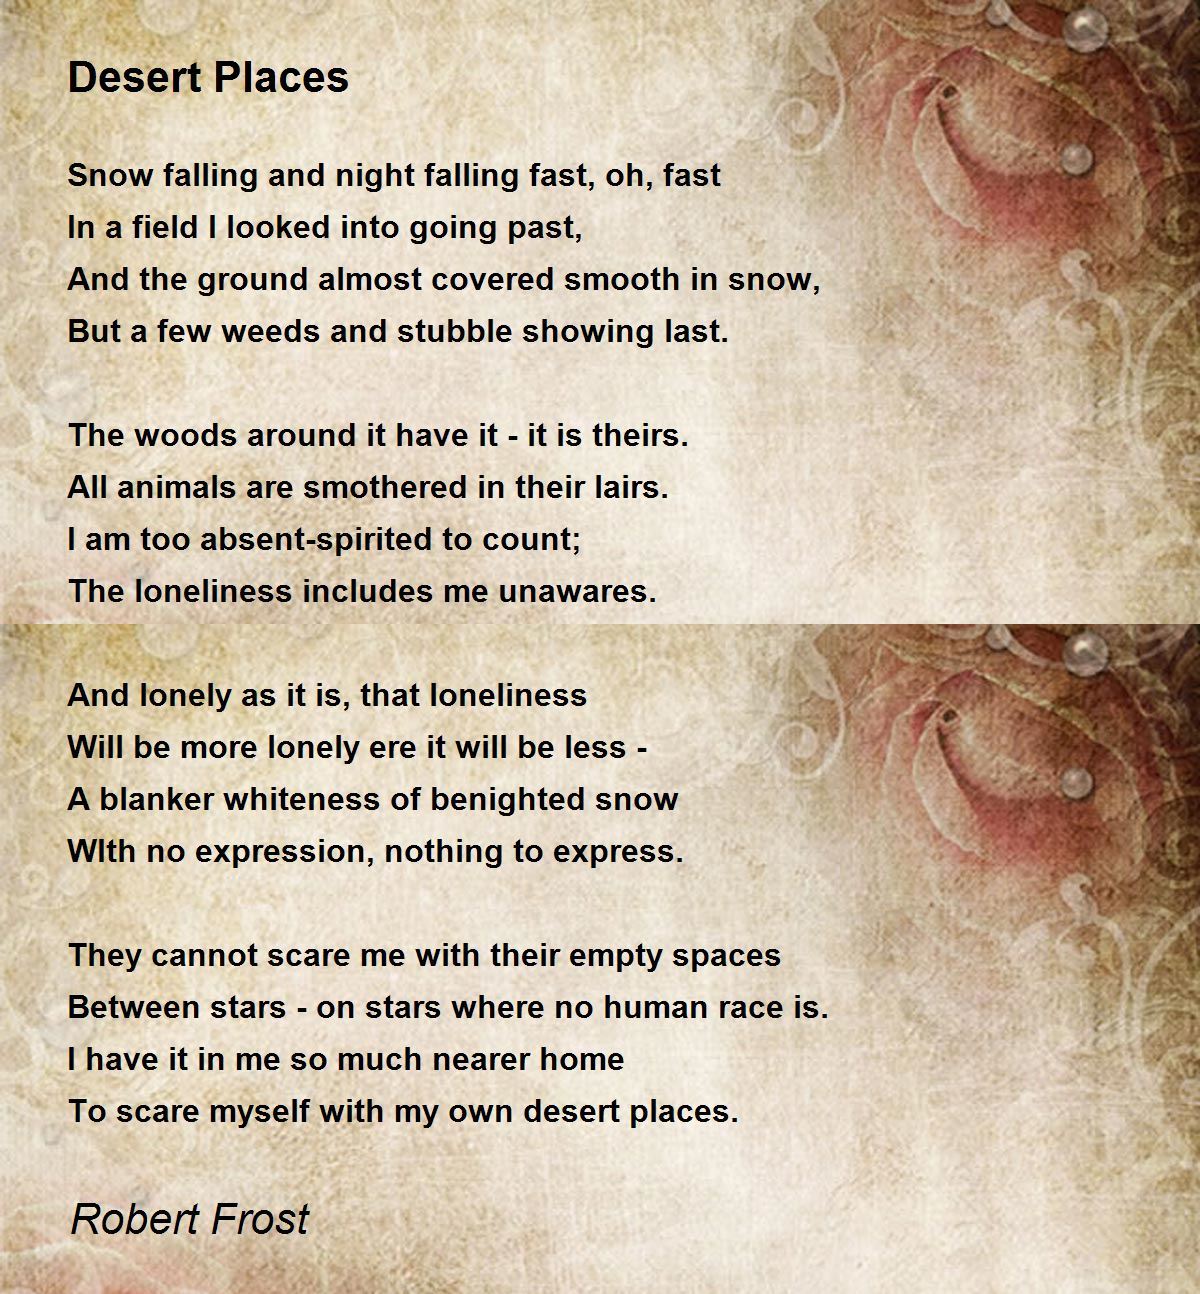 Desert Places Poem by Robert Frost - Poem Hunter